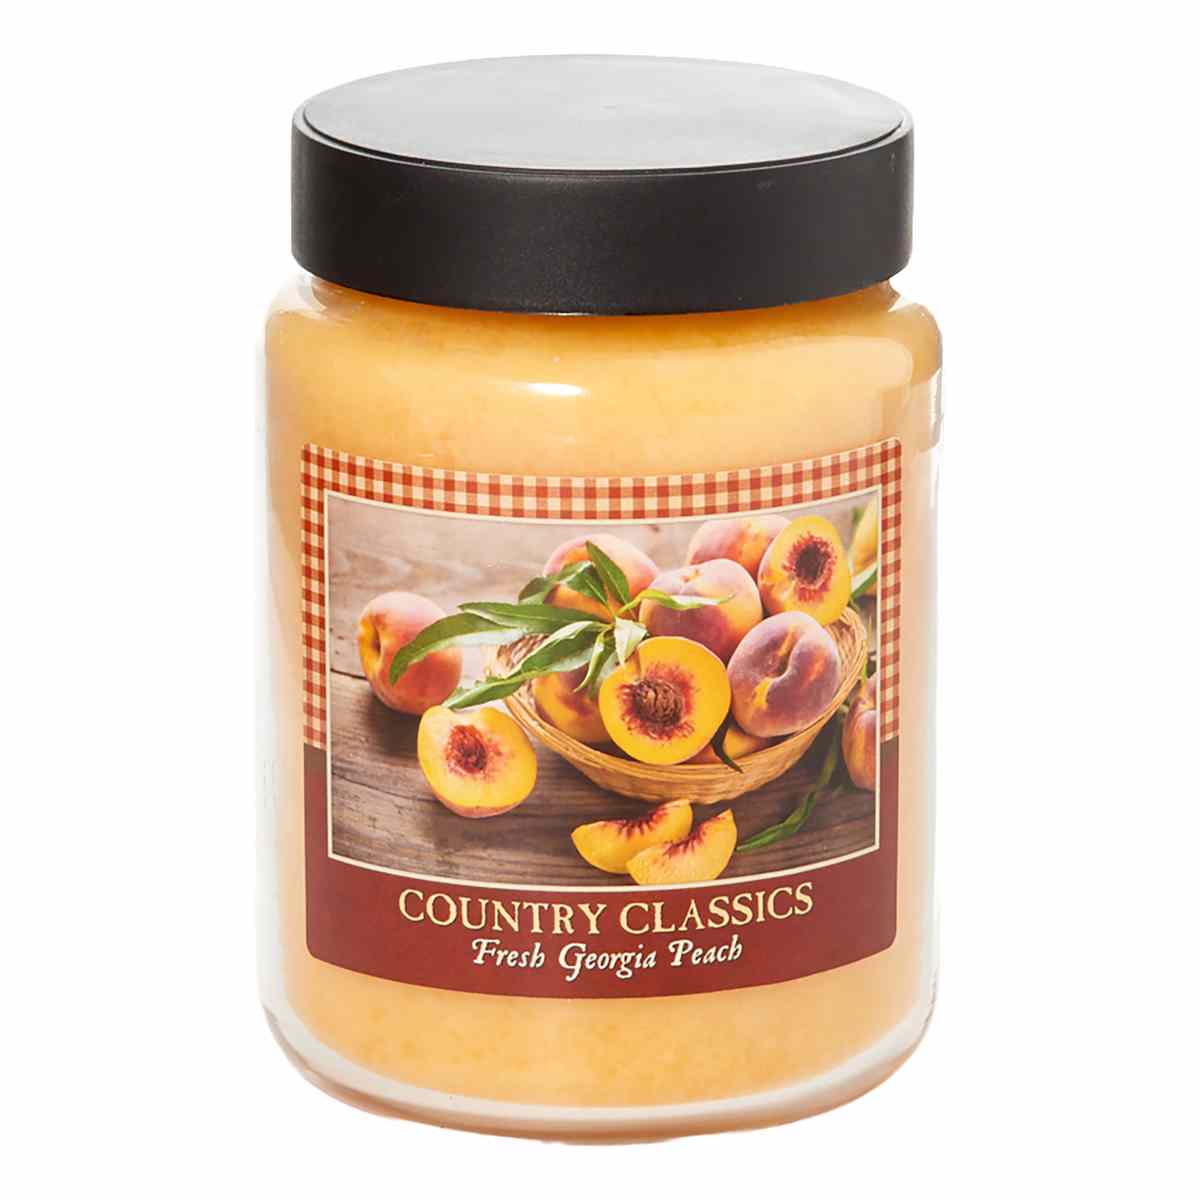 Country Classics Fresh Georgia Peach 26oz. Jar Candle